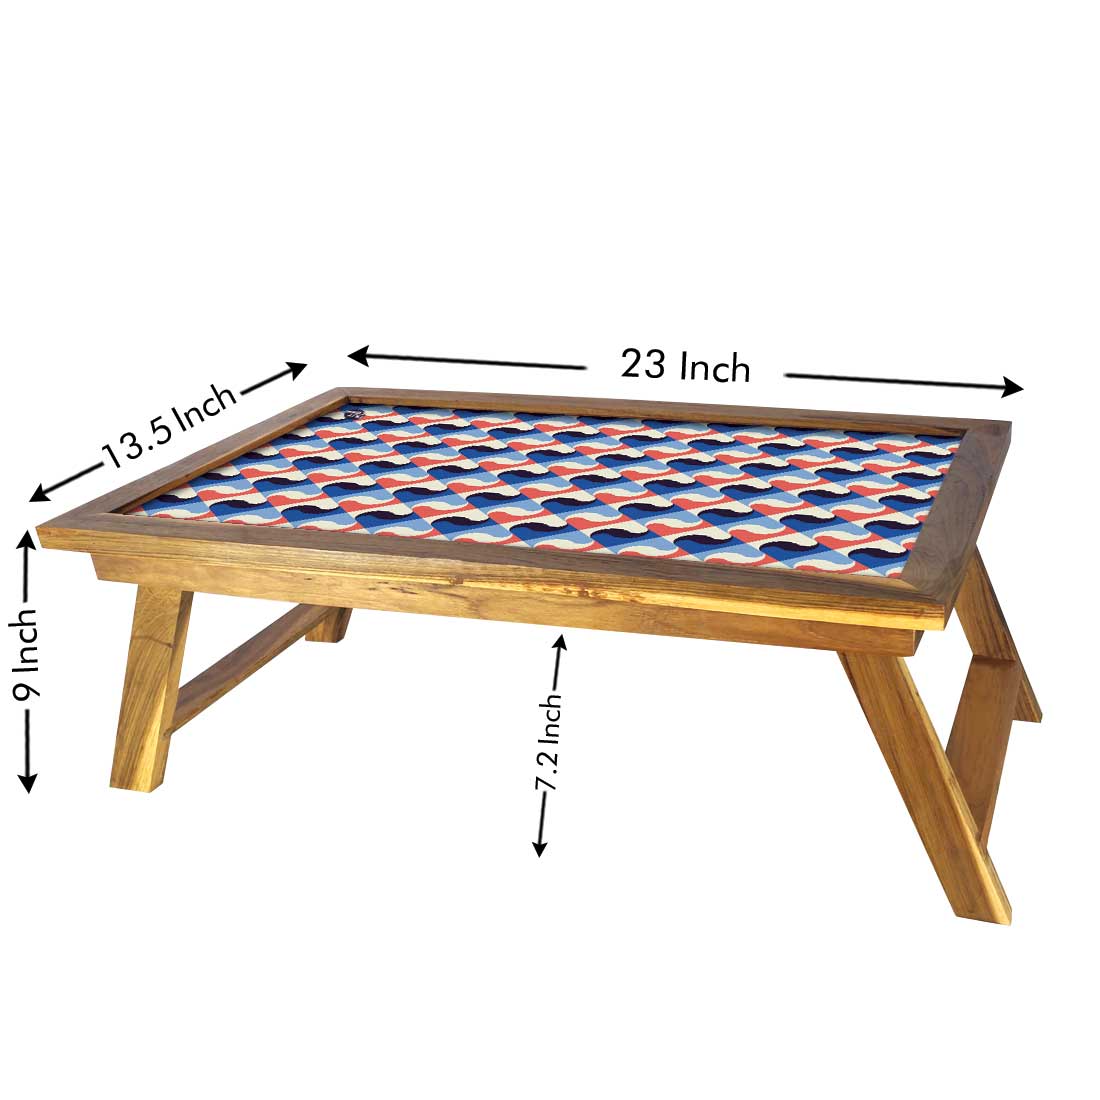 Nutcase Folding Laptop Table For Home Bed Lapdesk Breakfast Table Foldable Teak Wooden Study Desk - Retro Pattern Nutcase